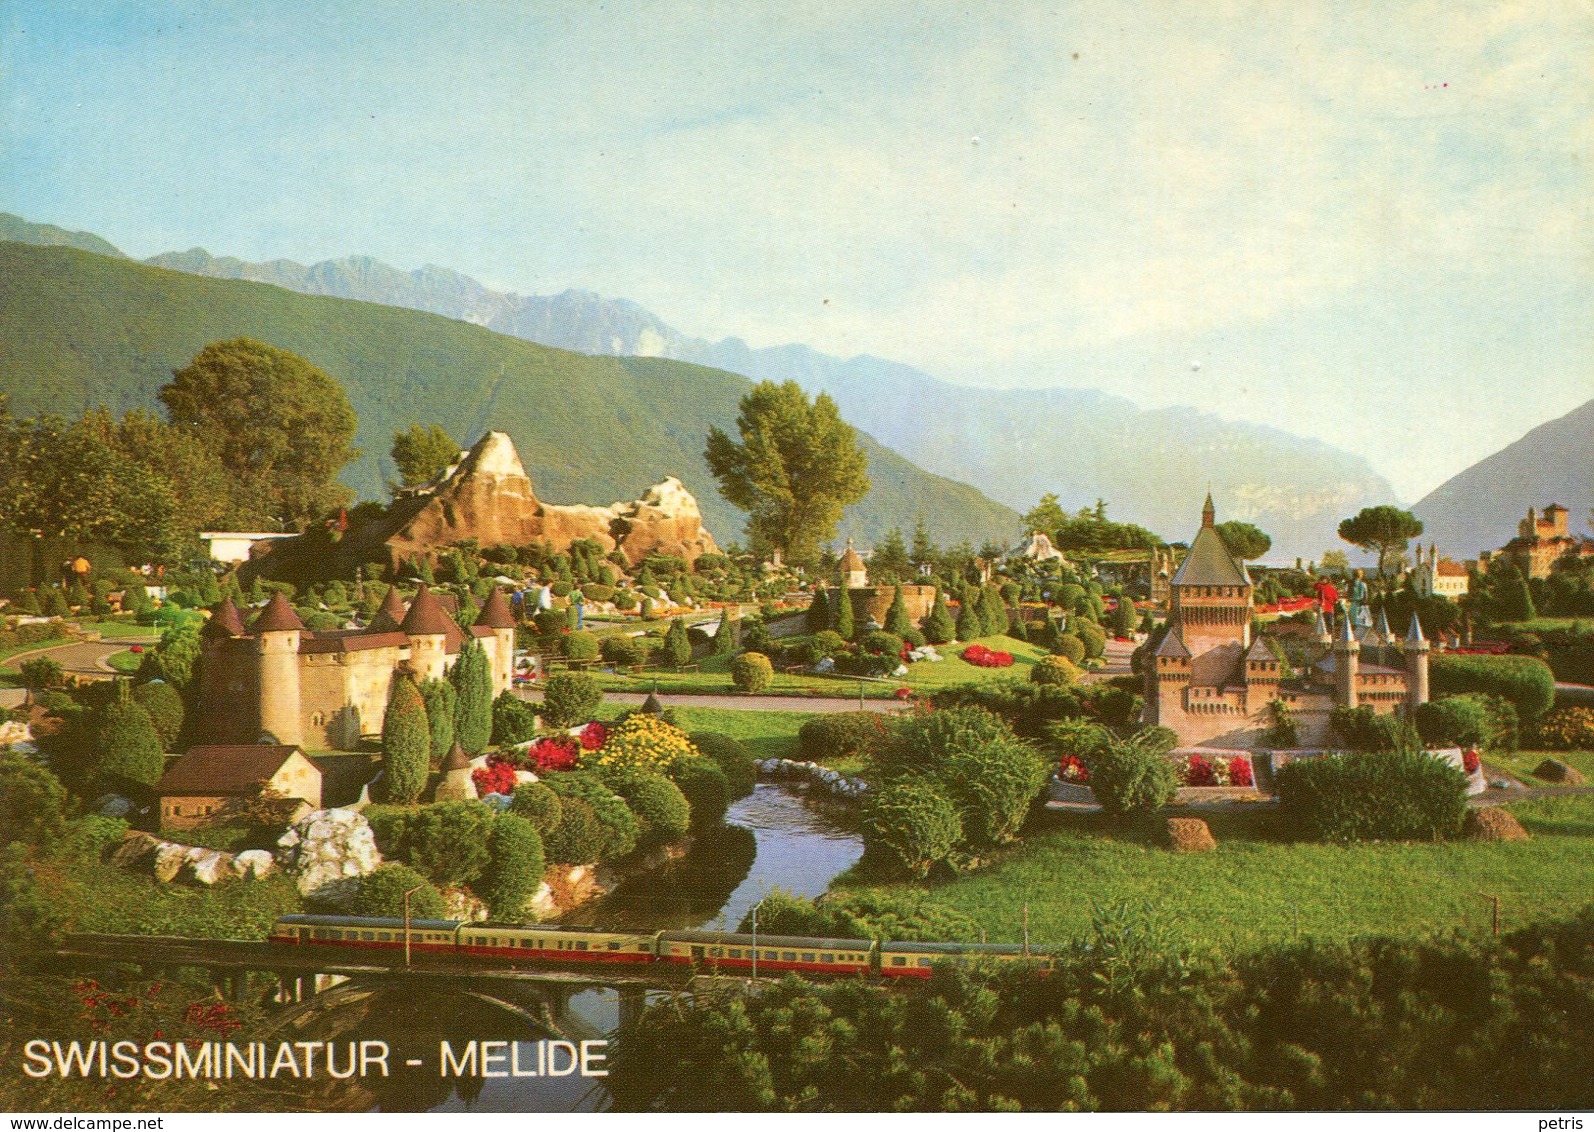 Melide, Swissminiature - Lot. 3128 - Melide